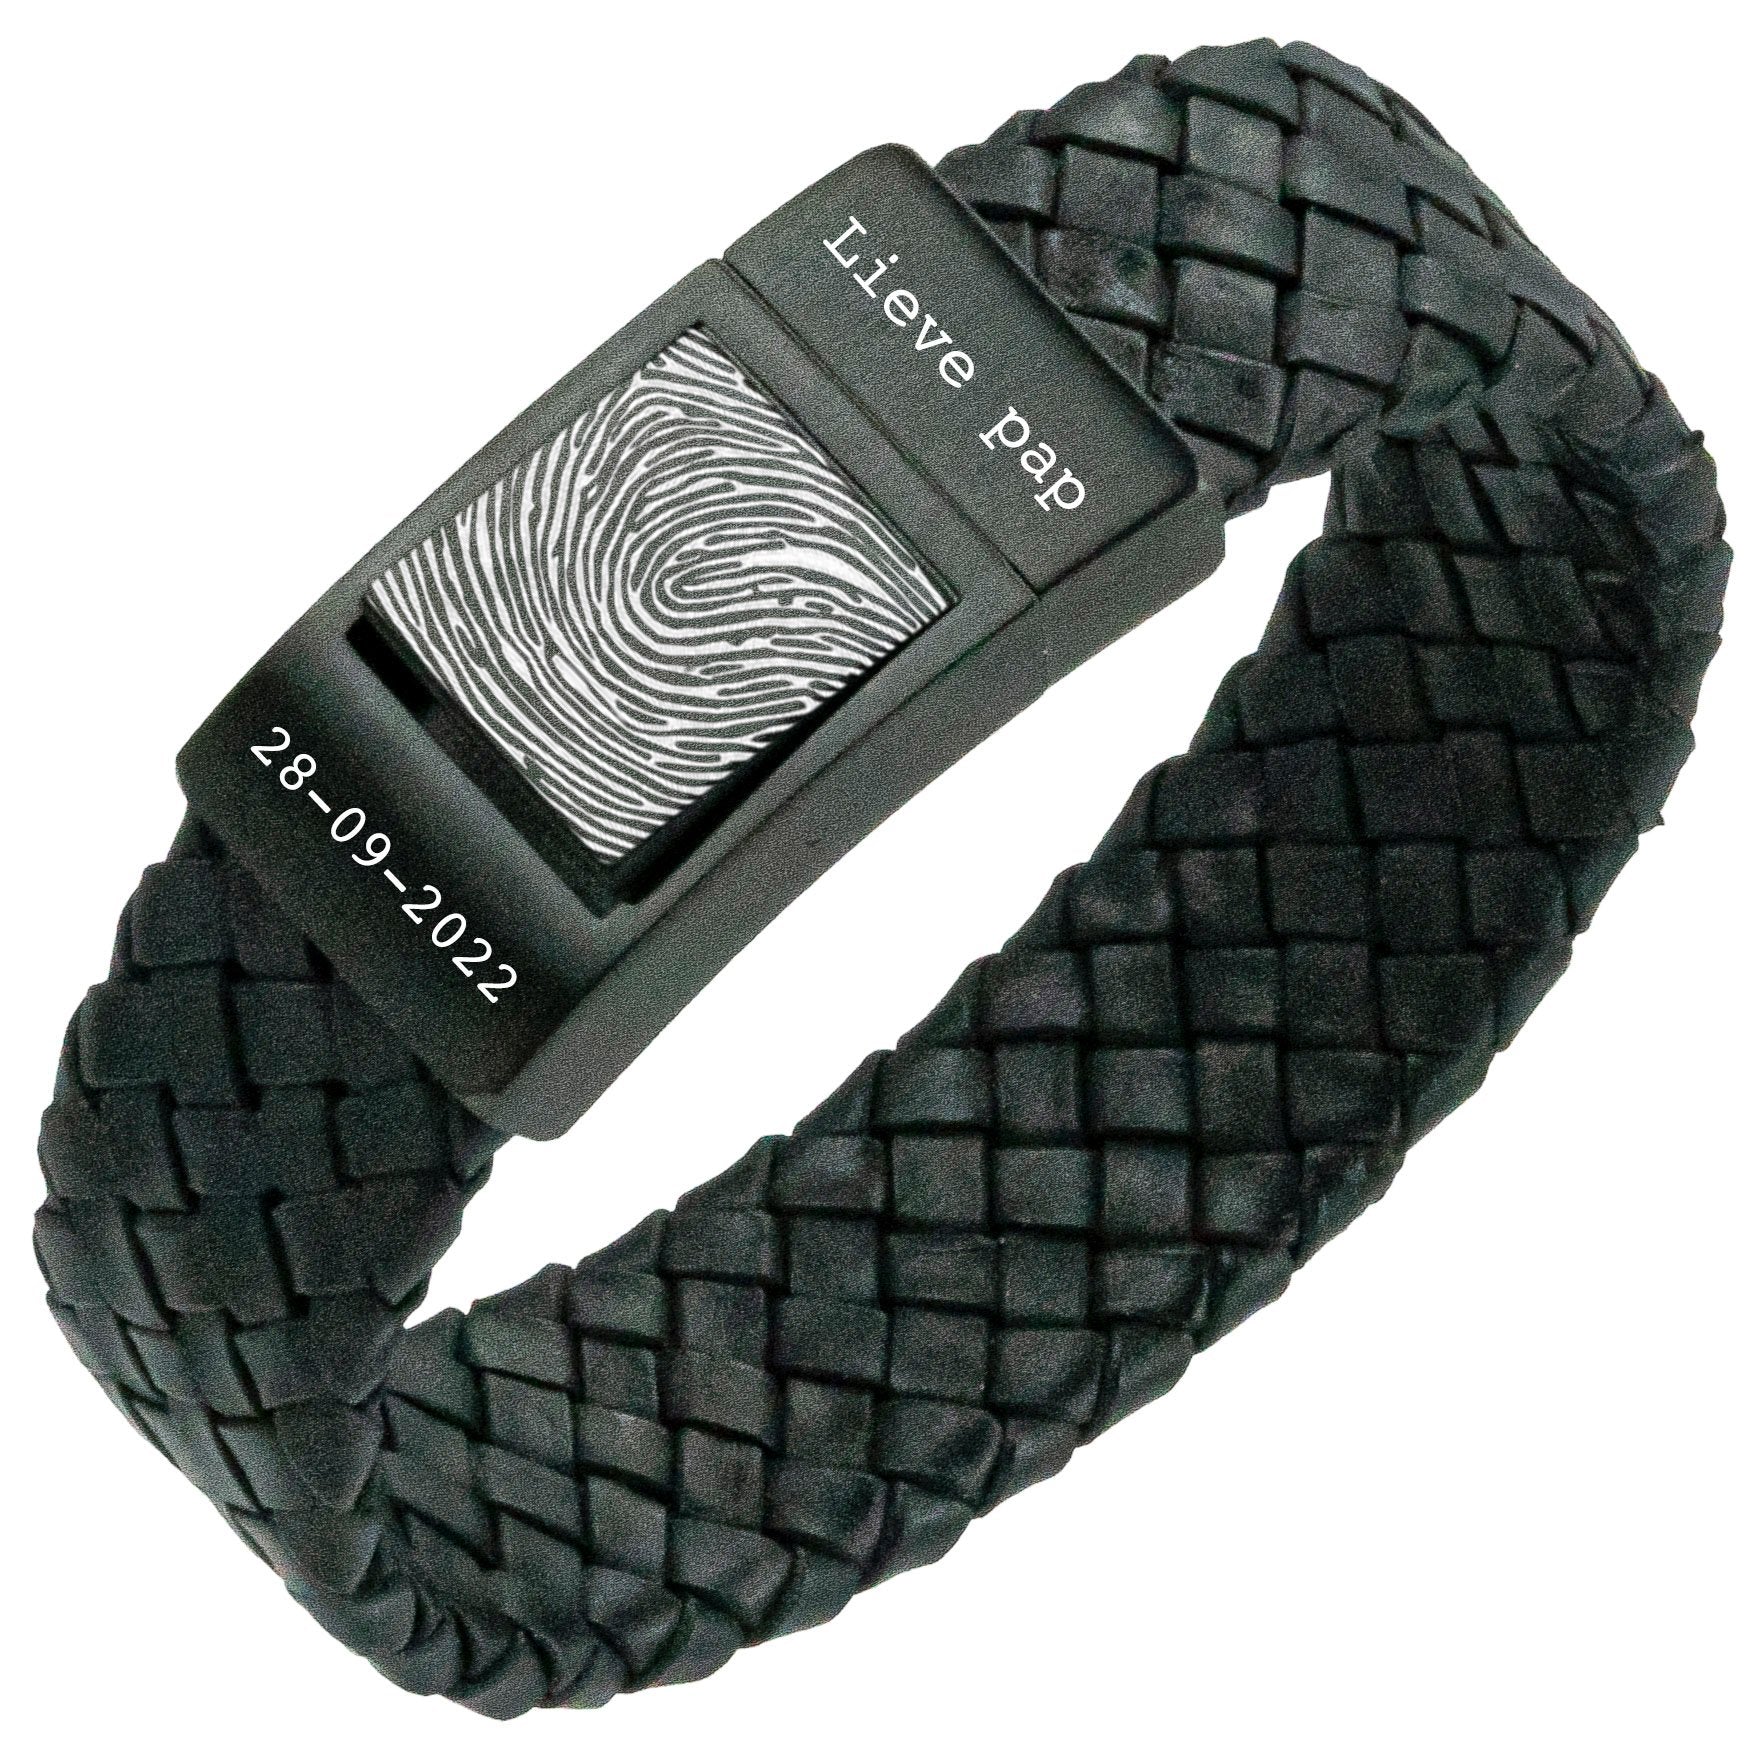 Dad Fingerprint bracelet - <b>Black braided</b> leather